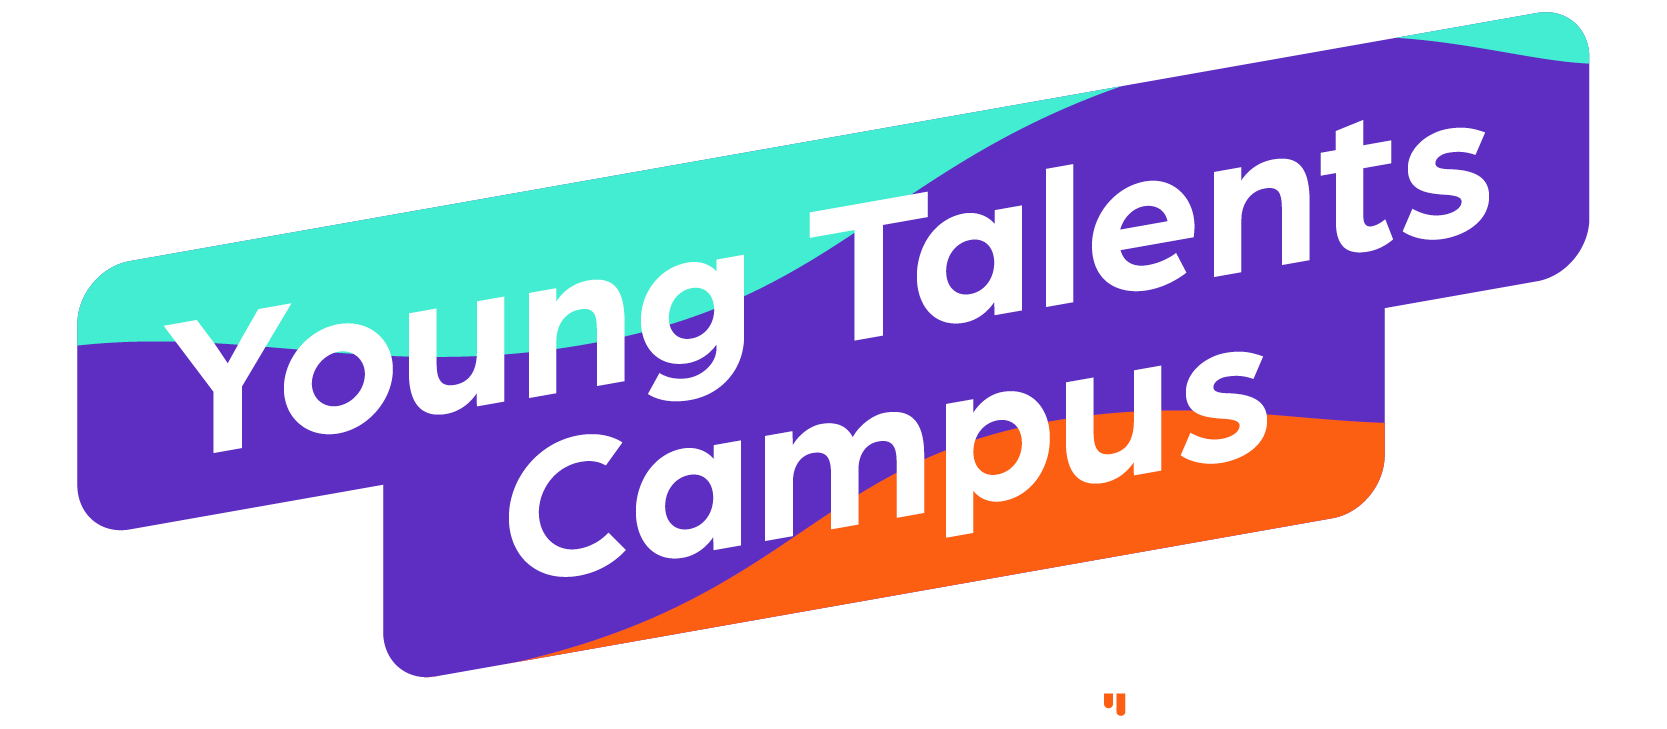 Young Talents Campus Logo